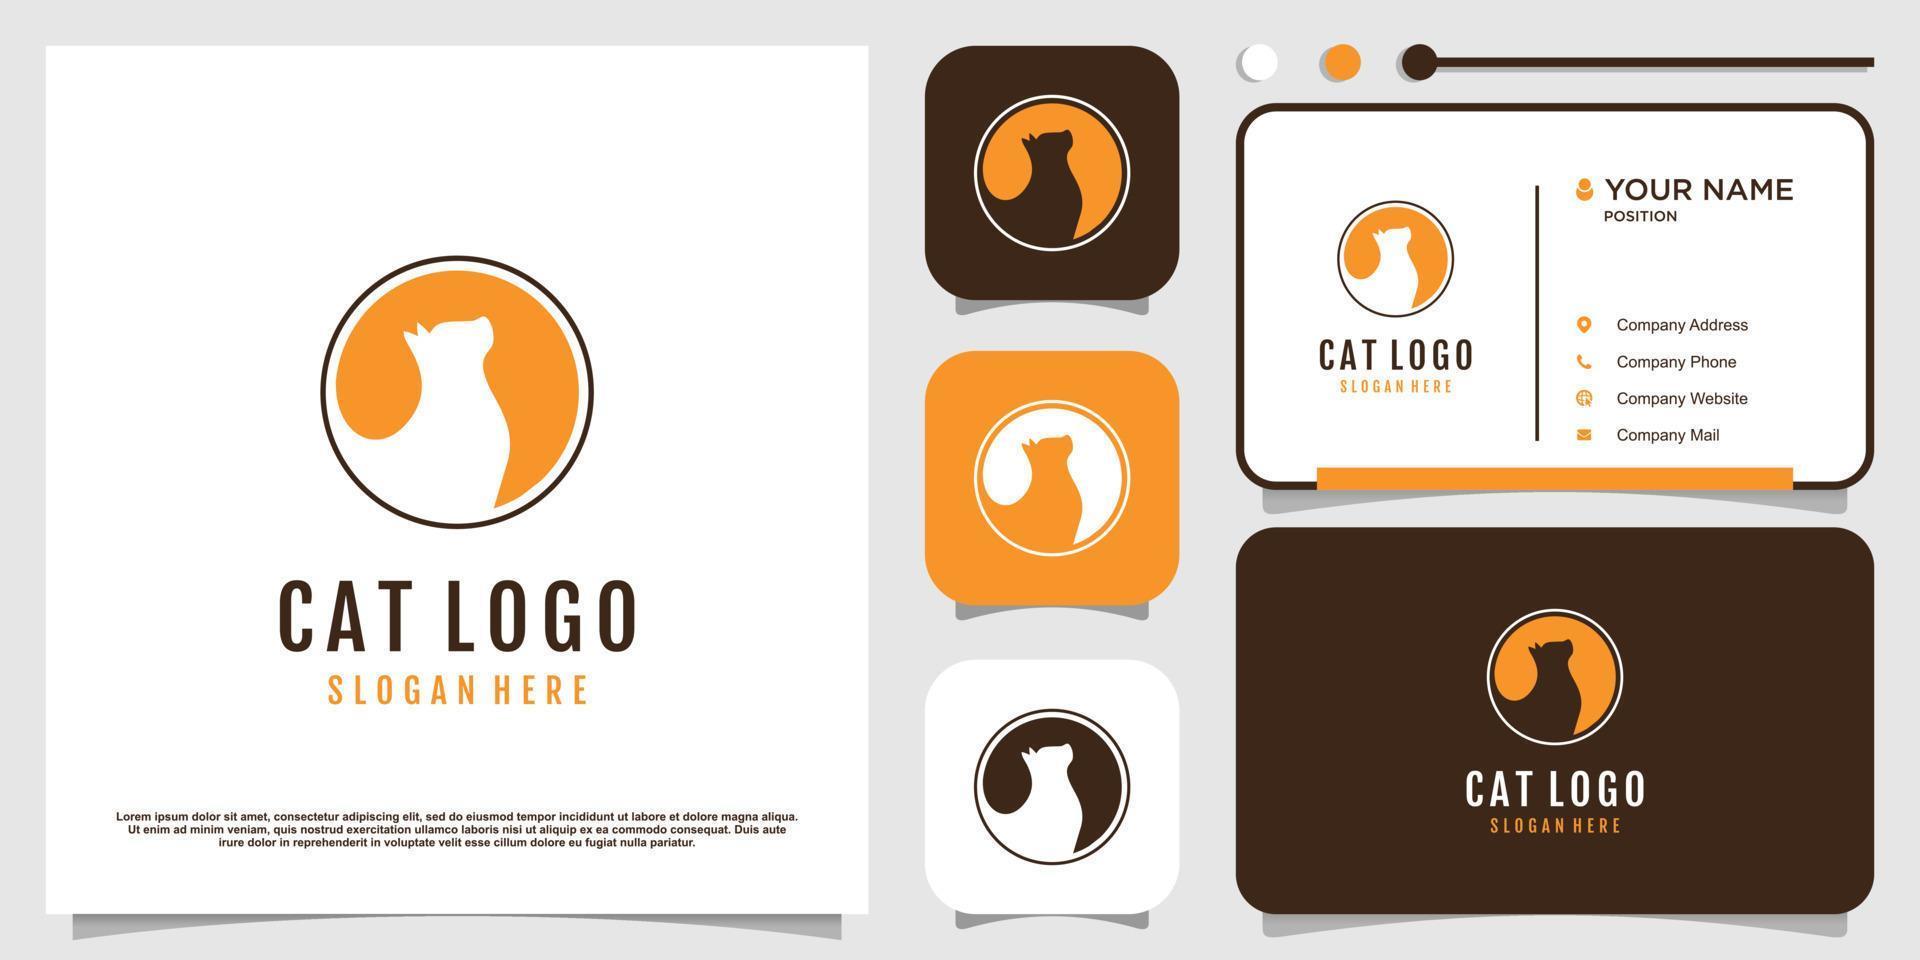 Cat and dog icon logo design with creative unique style Premium Vector